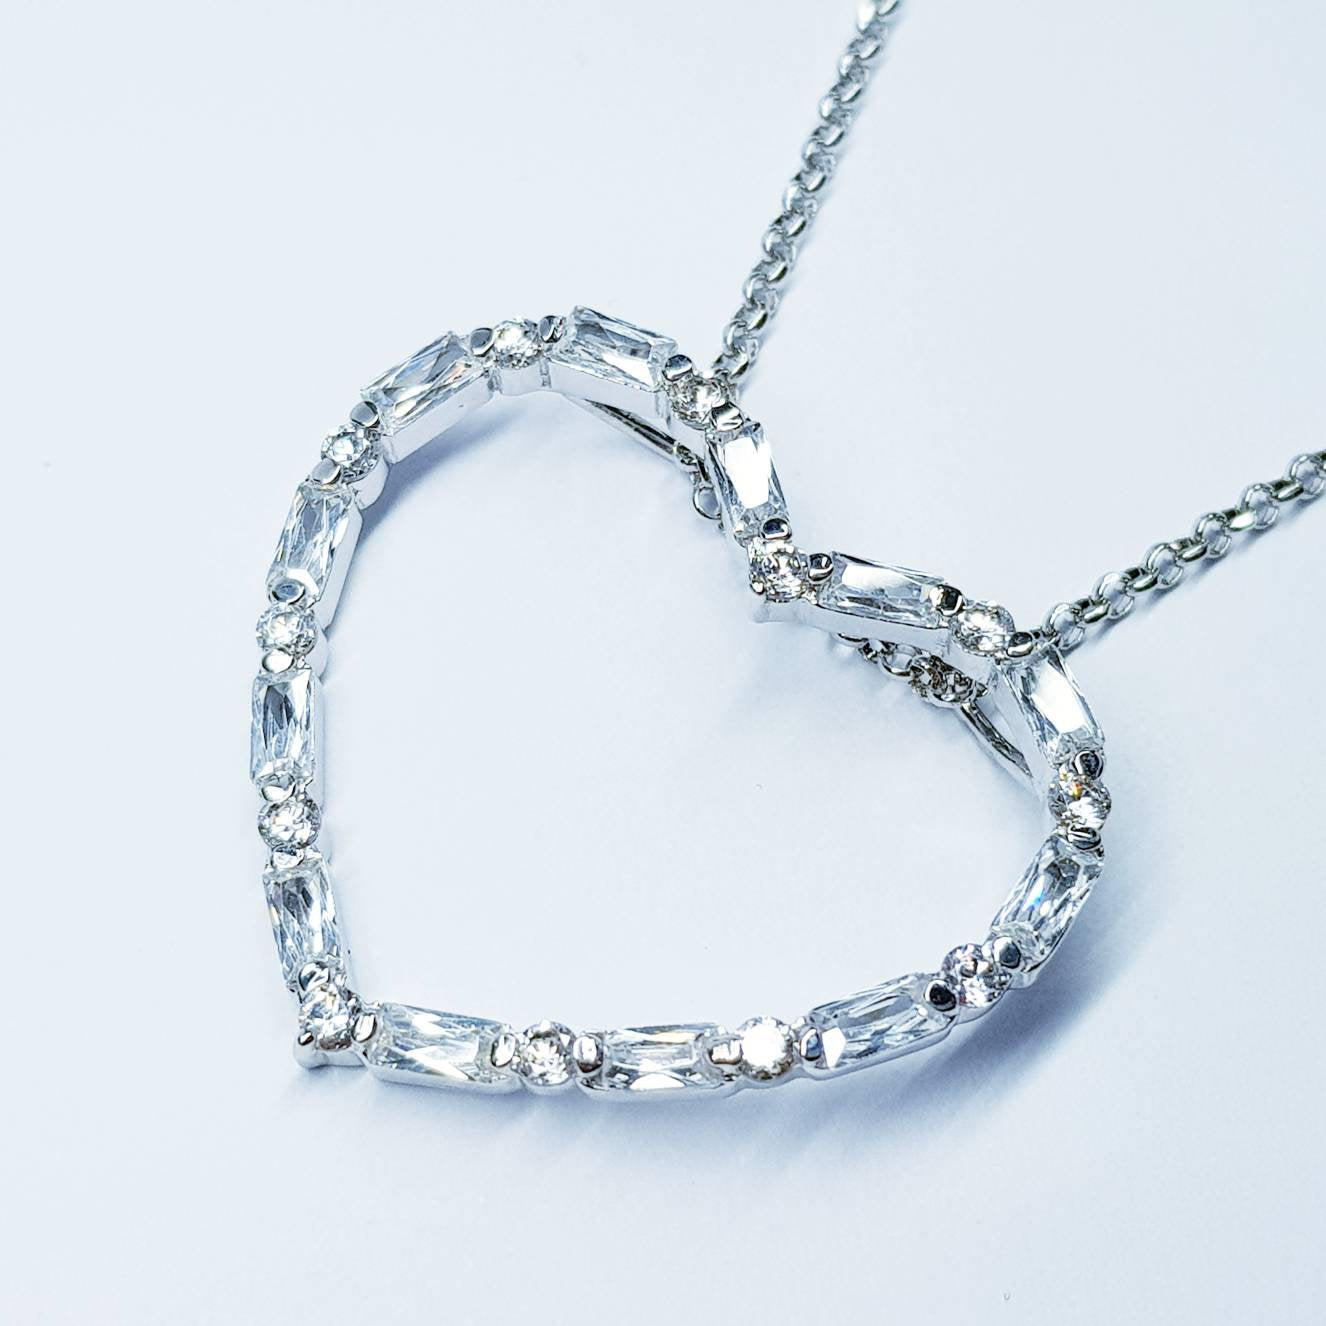 Heart necklace, Antique pendant, heart Jewelry, diamond heart necklace, jewelry gift for women